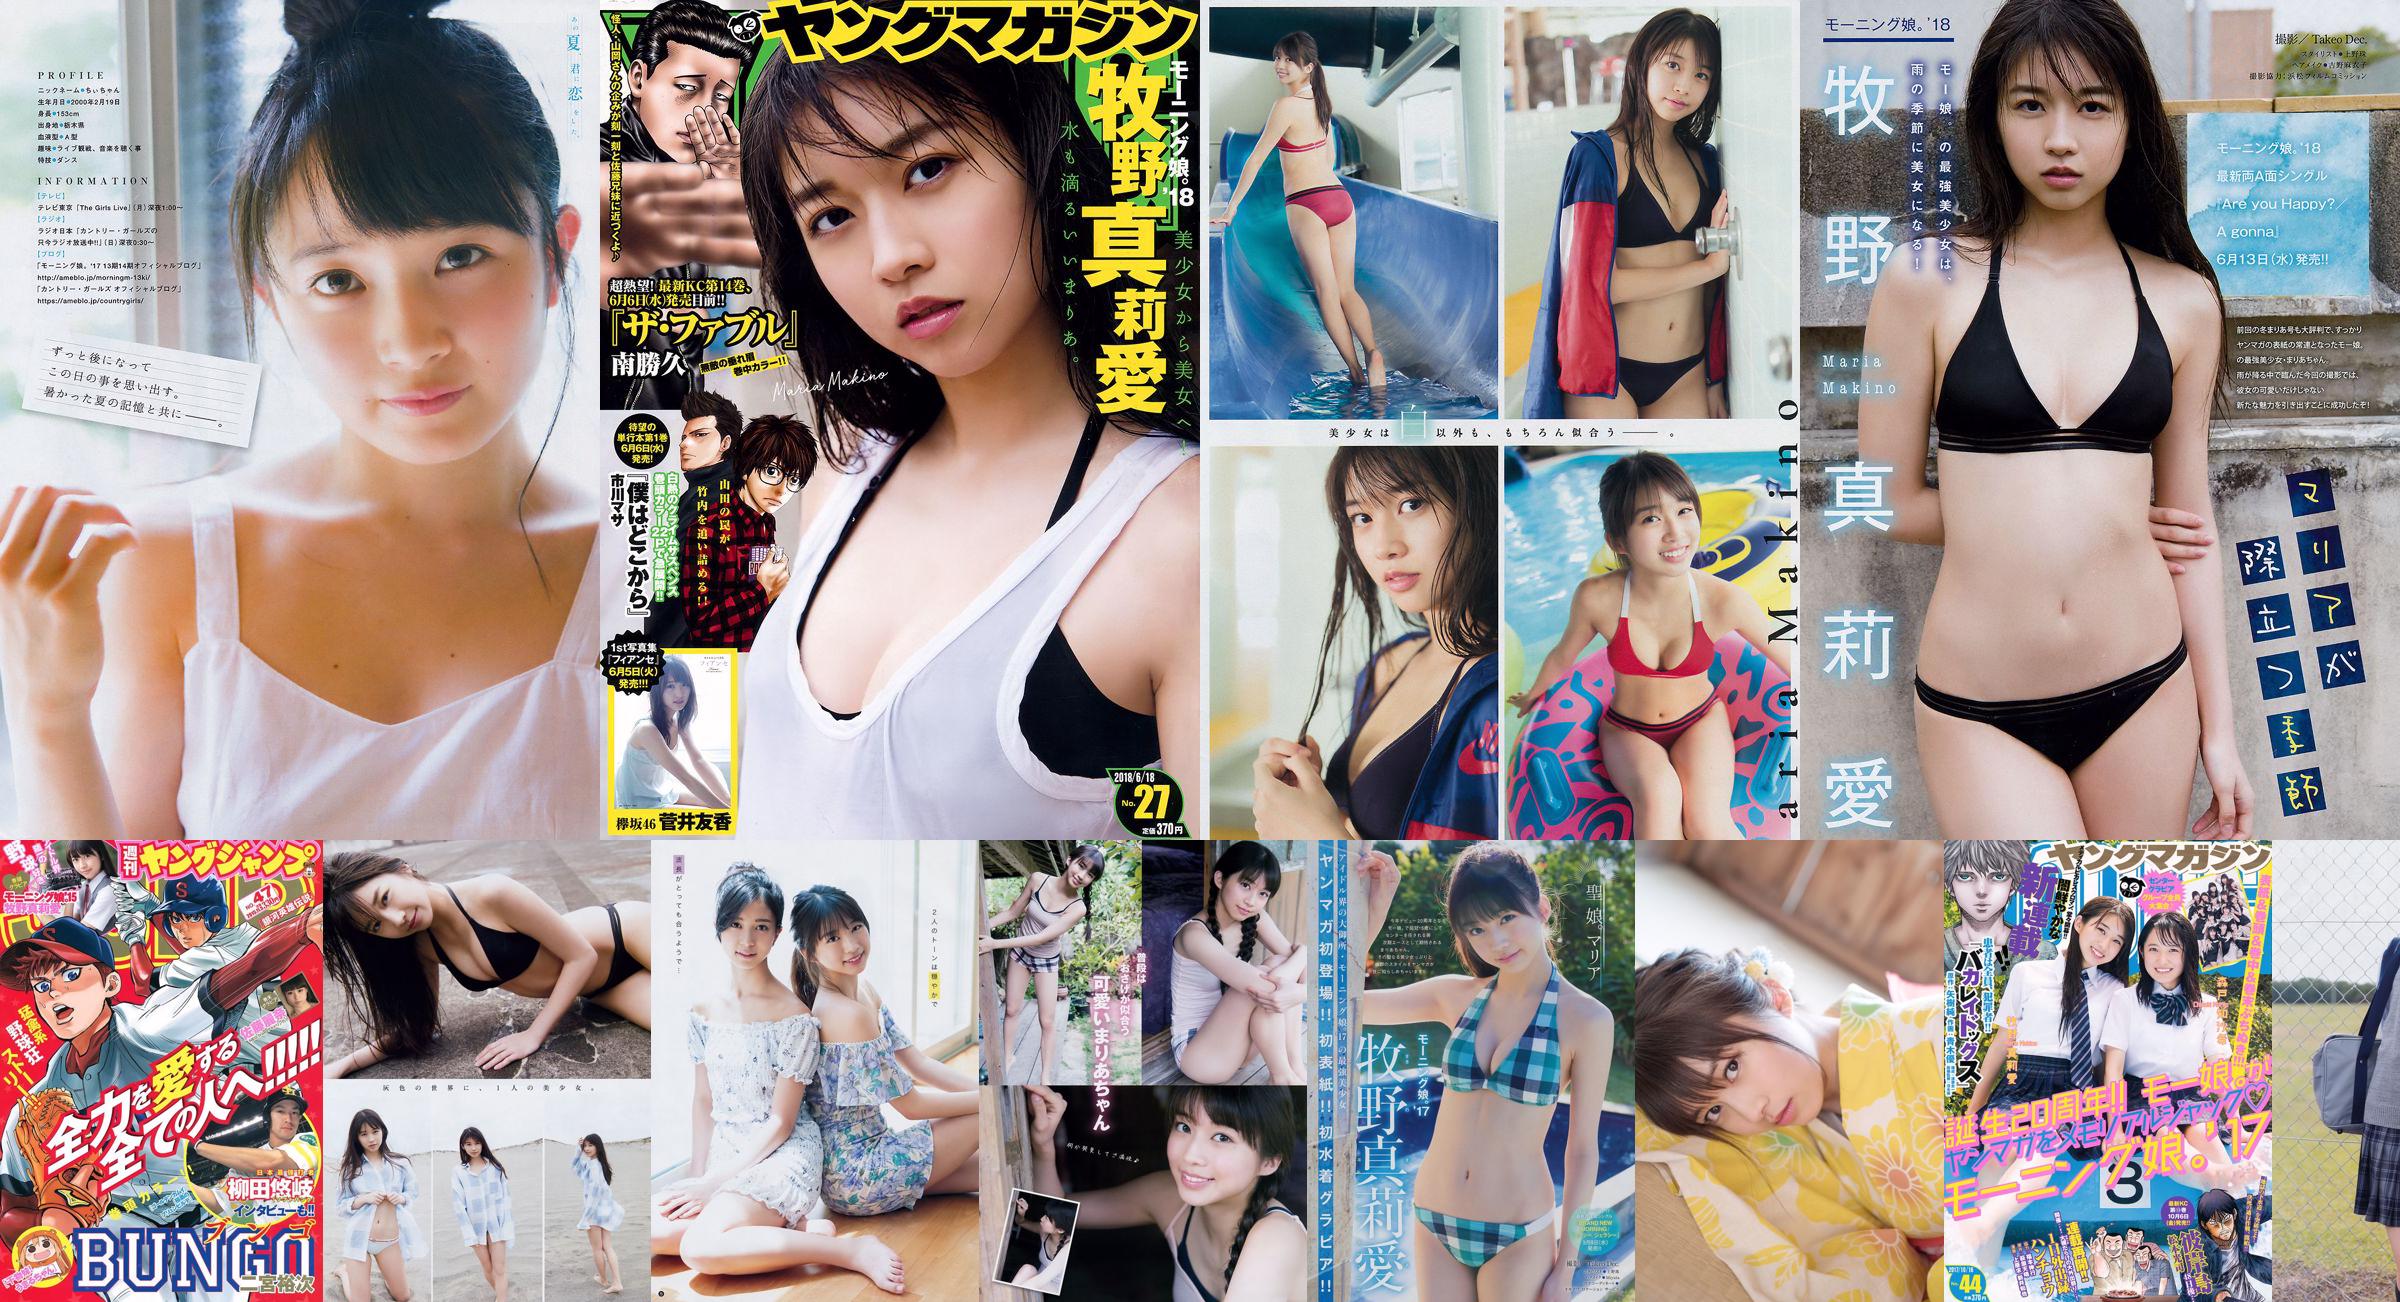 [Młody Mistrz] Makino Mariai Inoue Reyin Hazuki ゆめ 2018 No.19 Photo Magazine No.903552 Strona 6